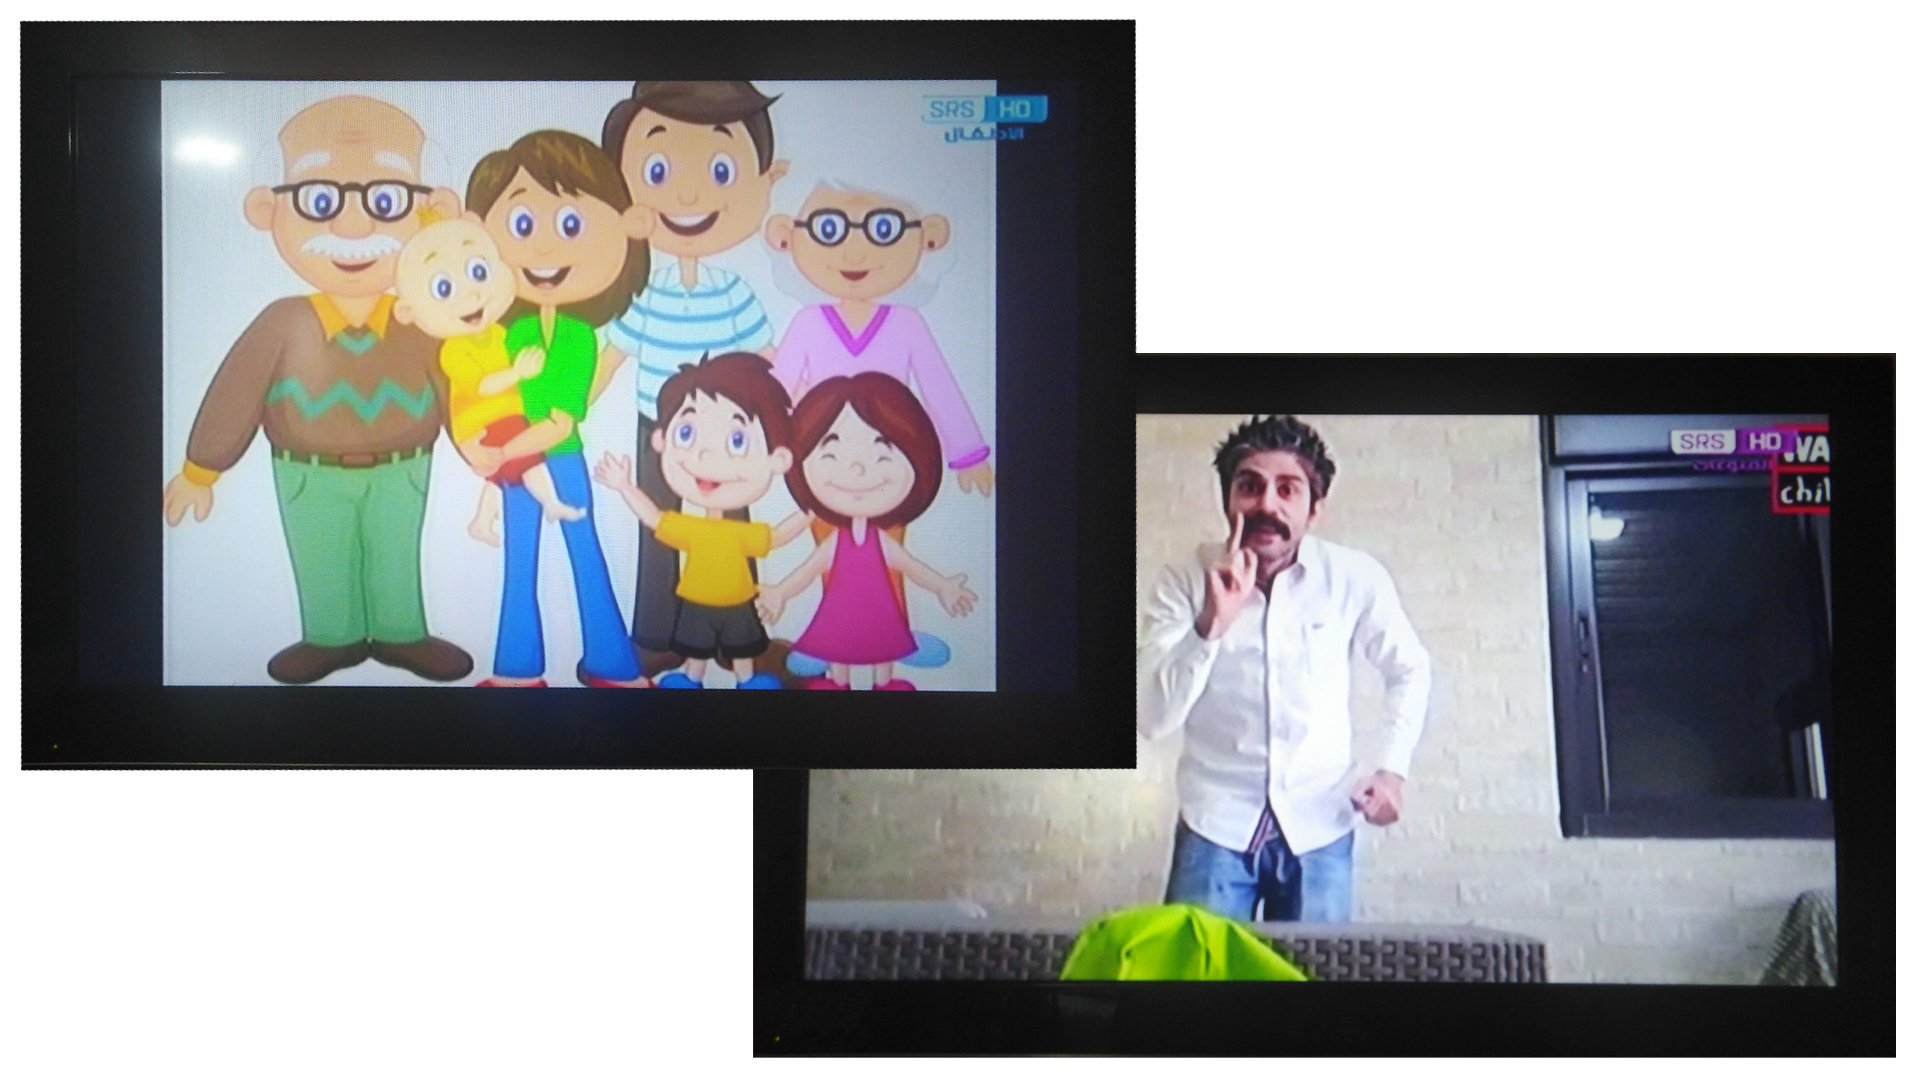 War Child Lebanon broadcast video Rinawi in times of corona pandemic lockdown